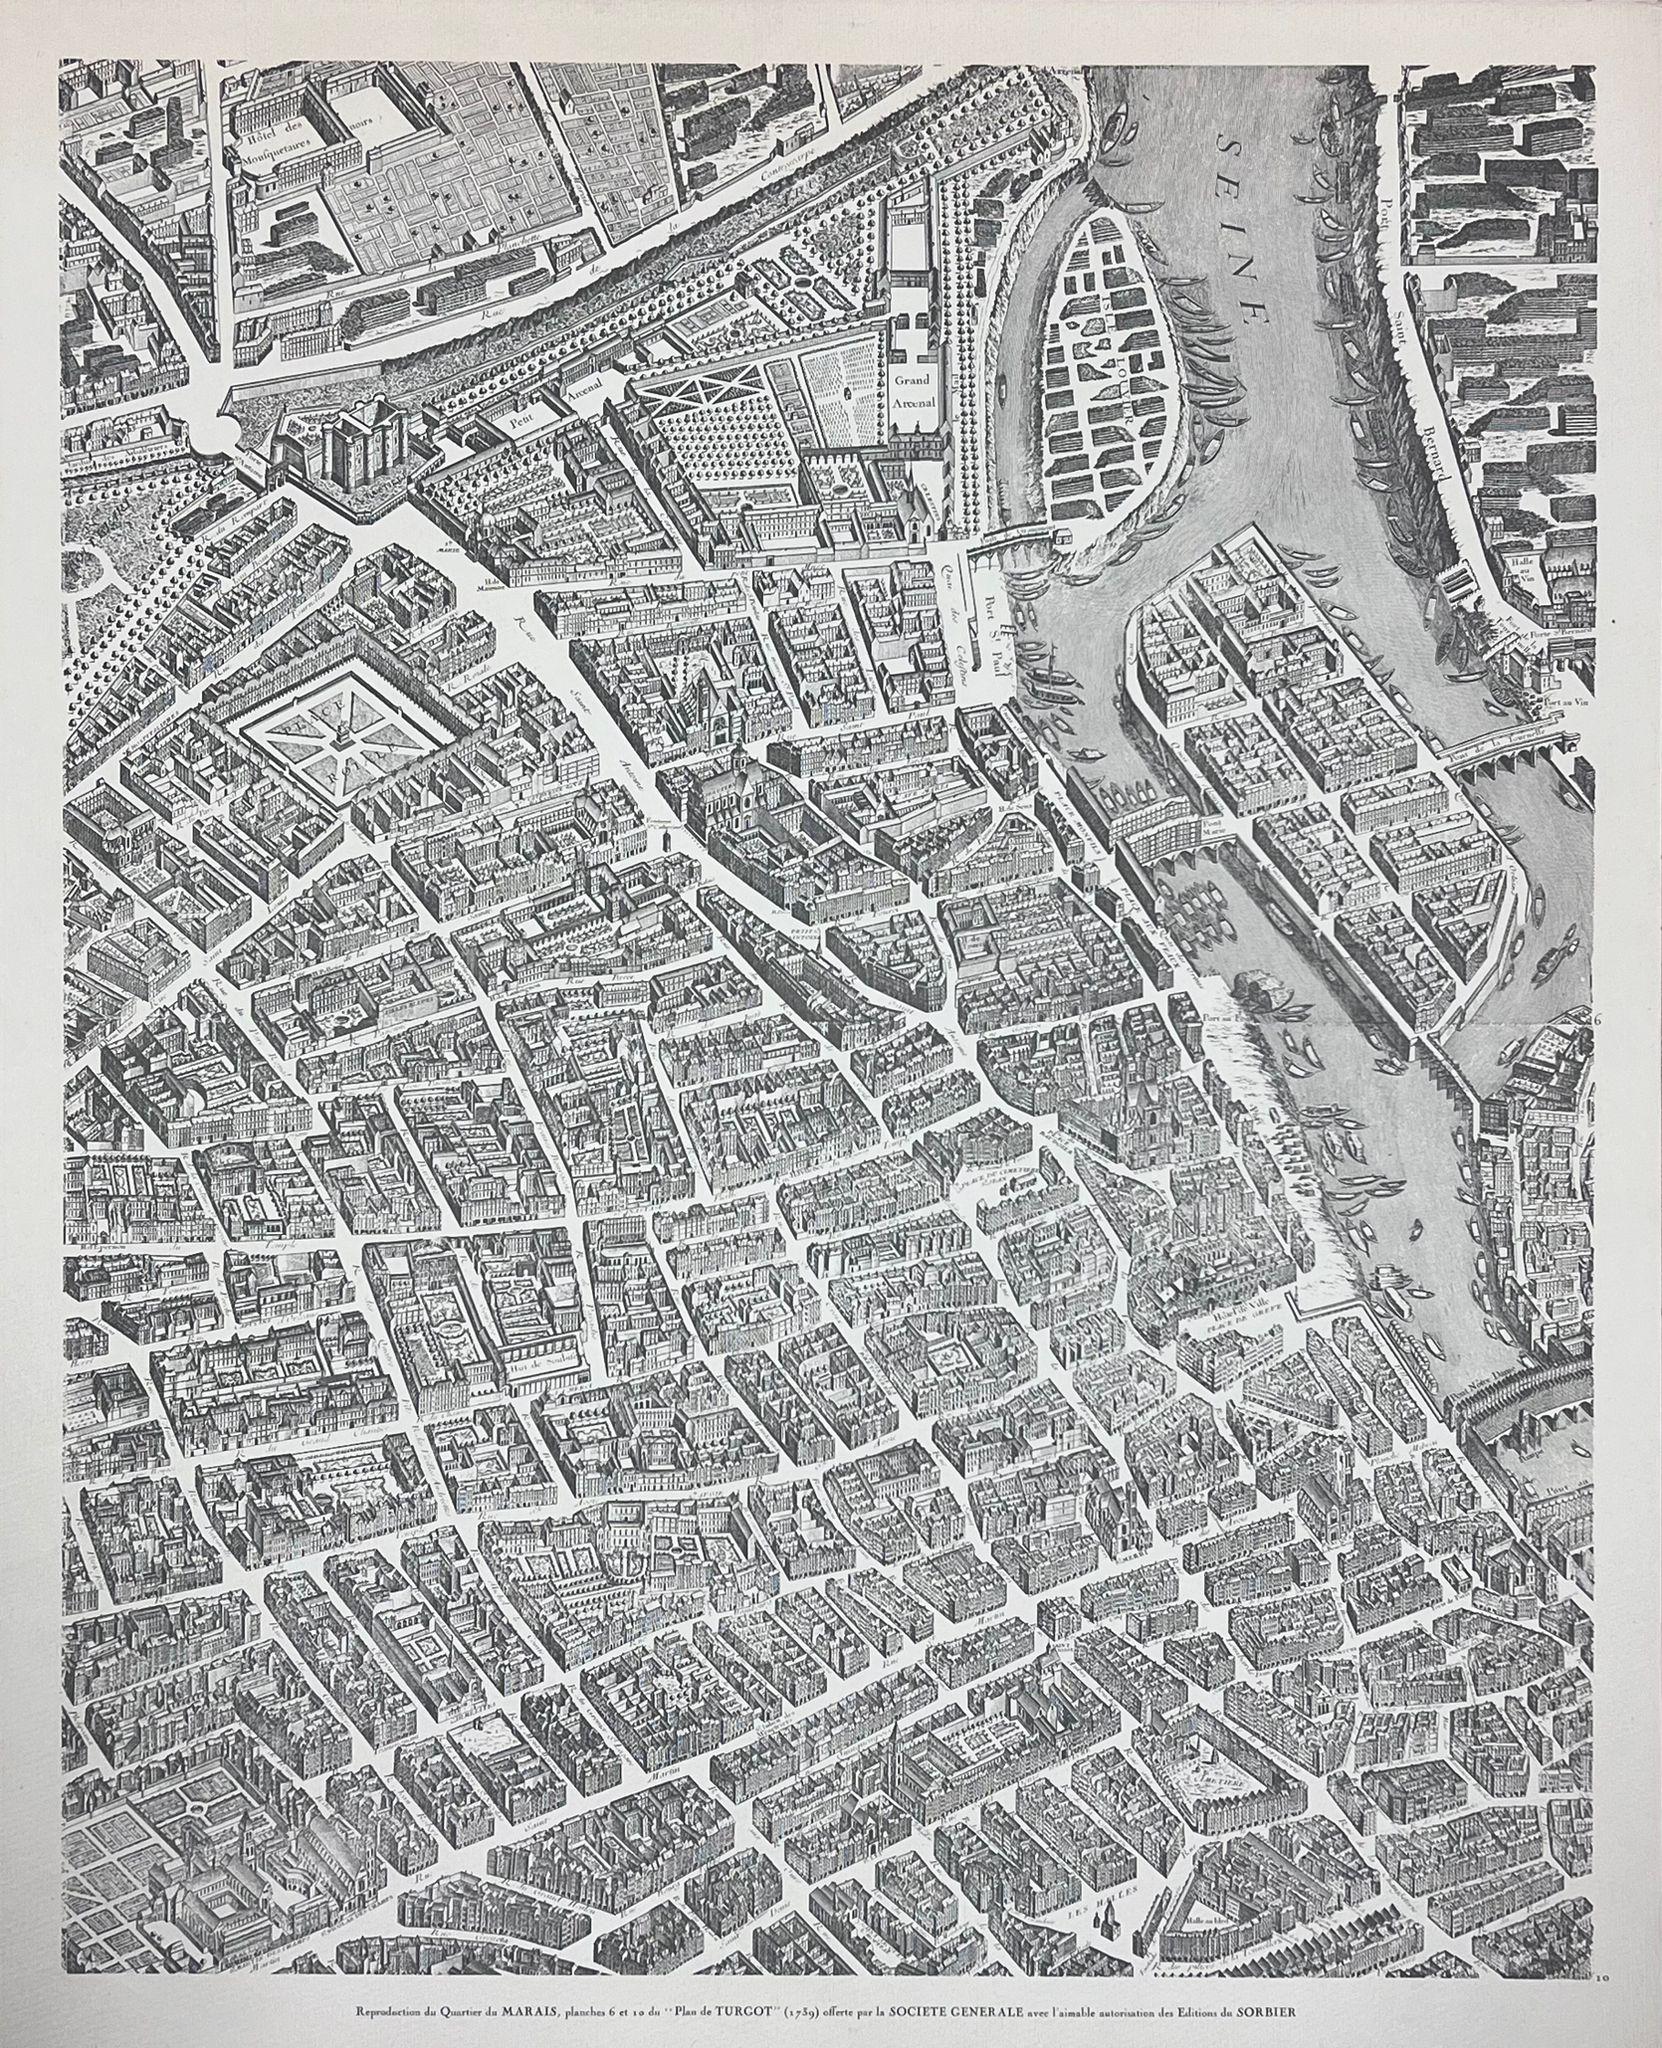 Vintage Black and White Ariel View Map Of Paris - Print by Josine Vignon